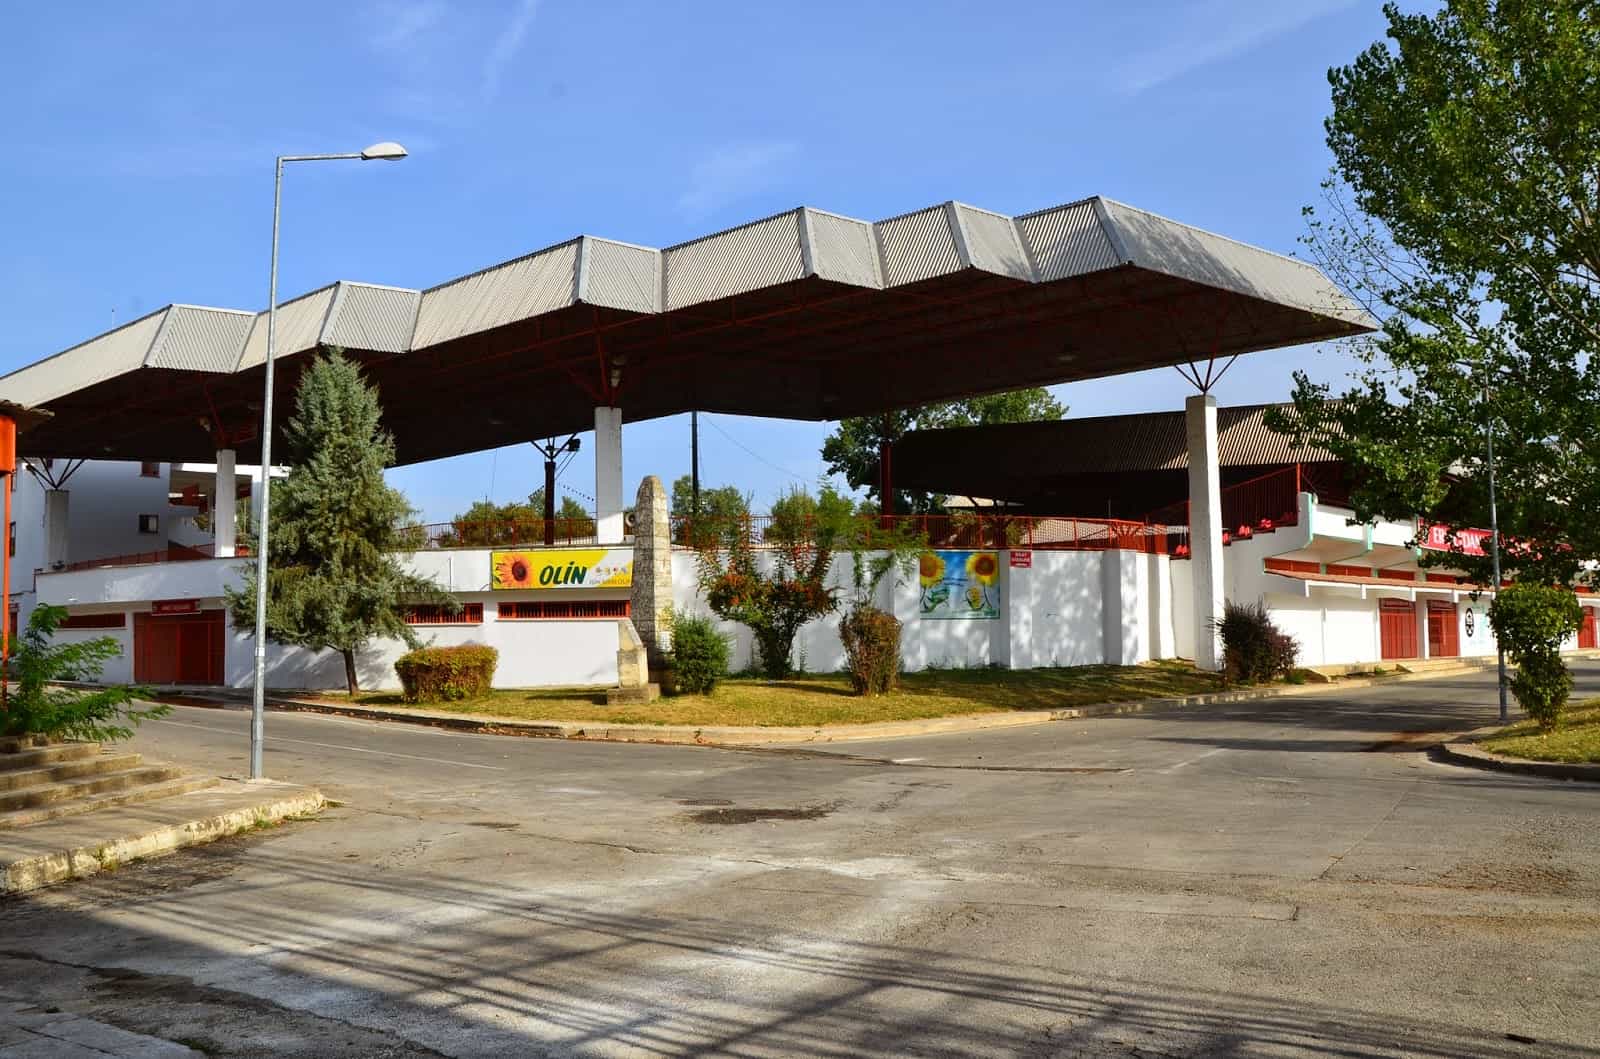 Kırkpınar Wrestling Complex in Edirne, Turkey